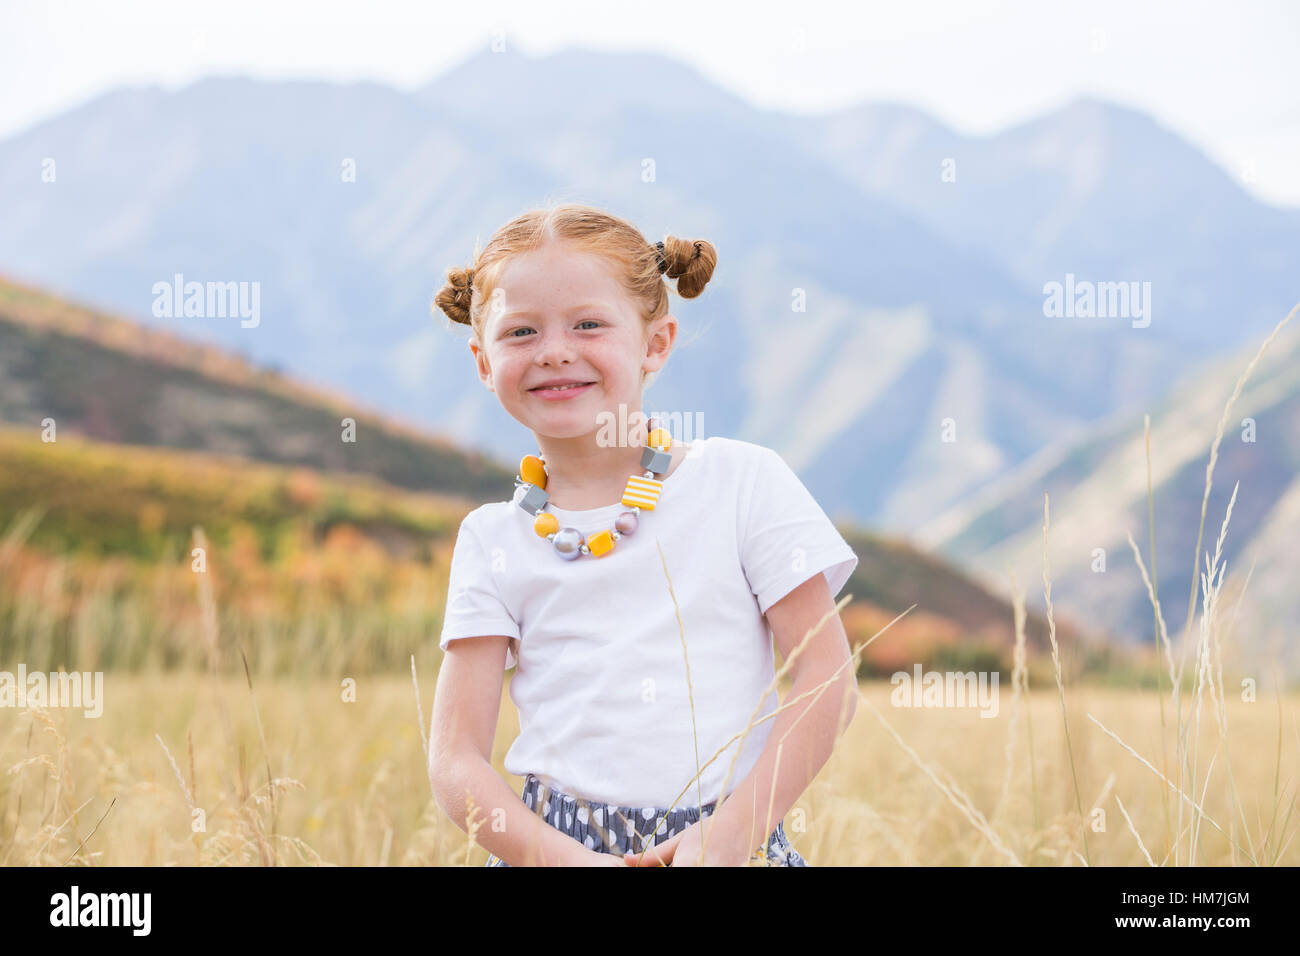 USA, Utah, Provo, Girl (4-5) standing in field Stock Photo